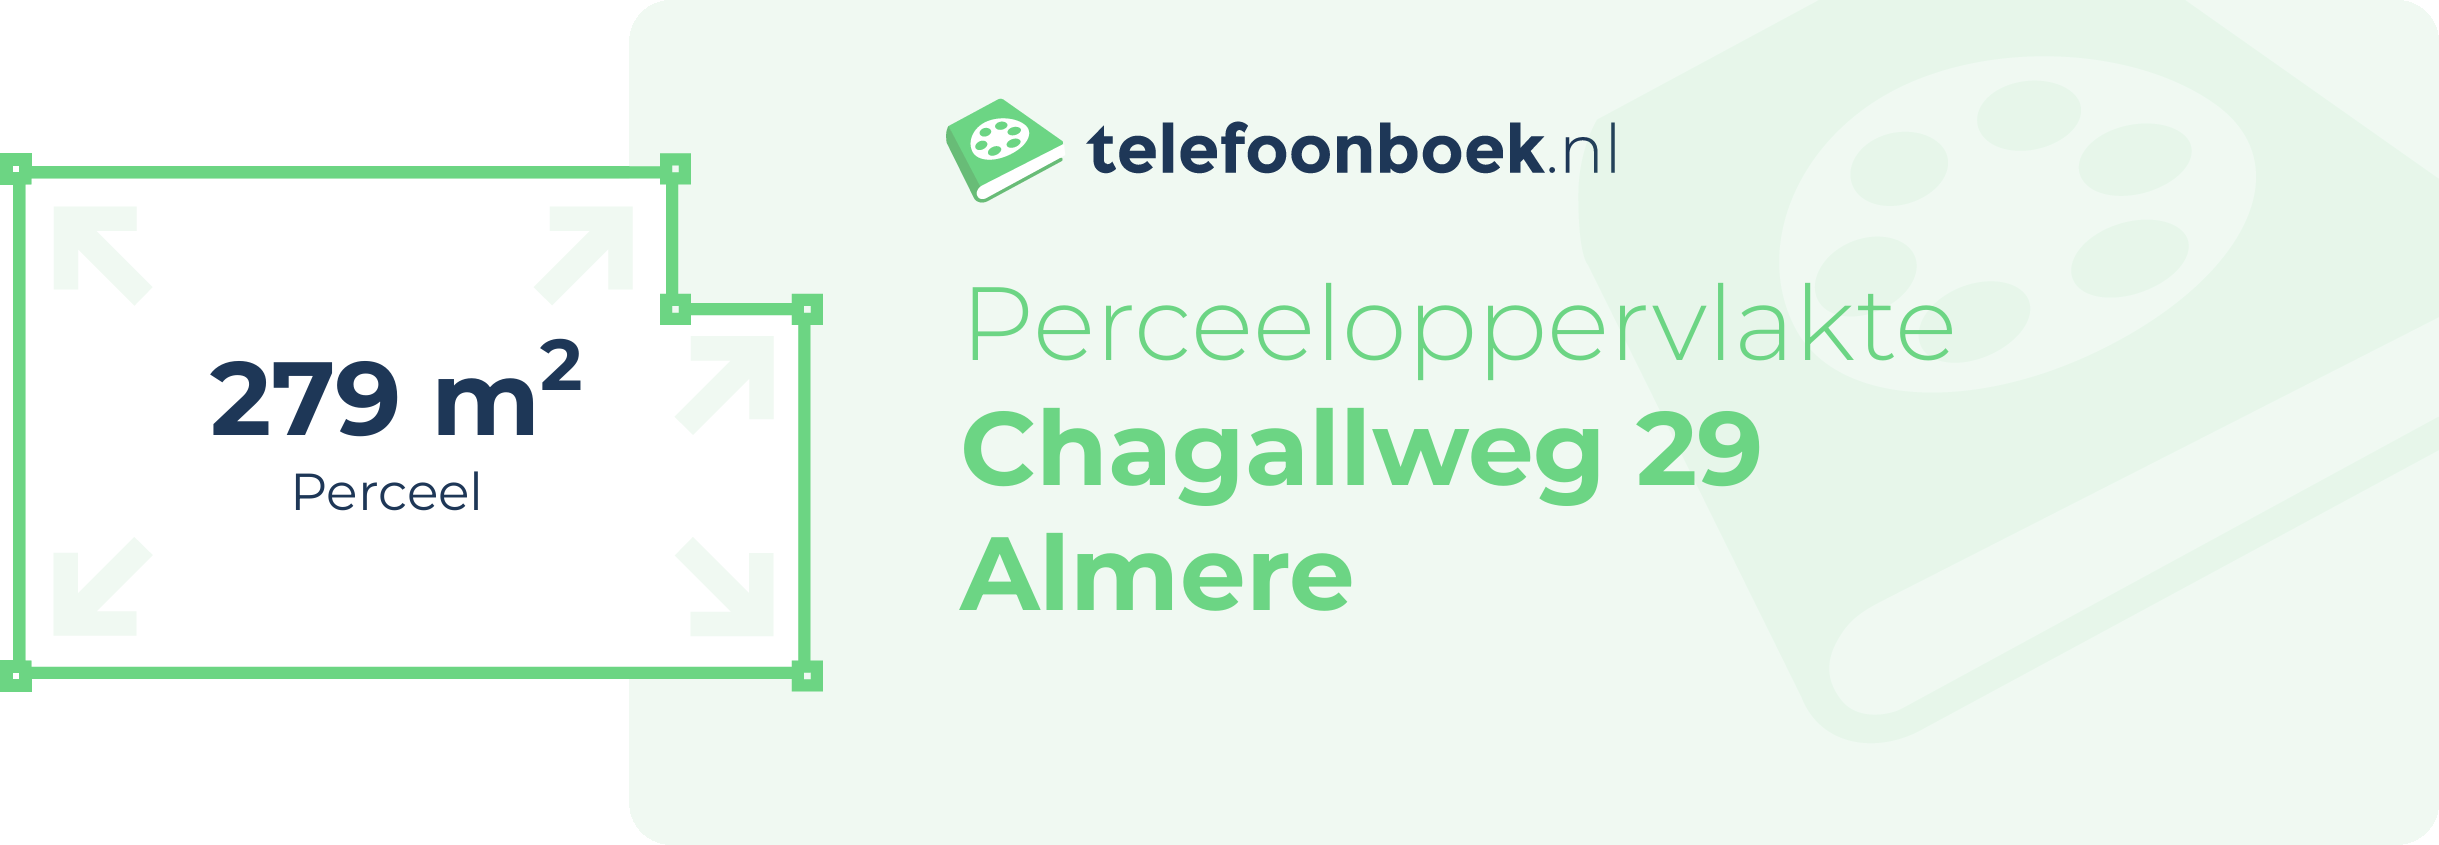 Perceeloppervlakte Chagallweg 29 Almere